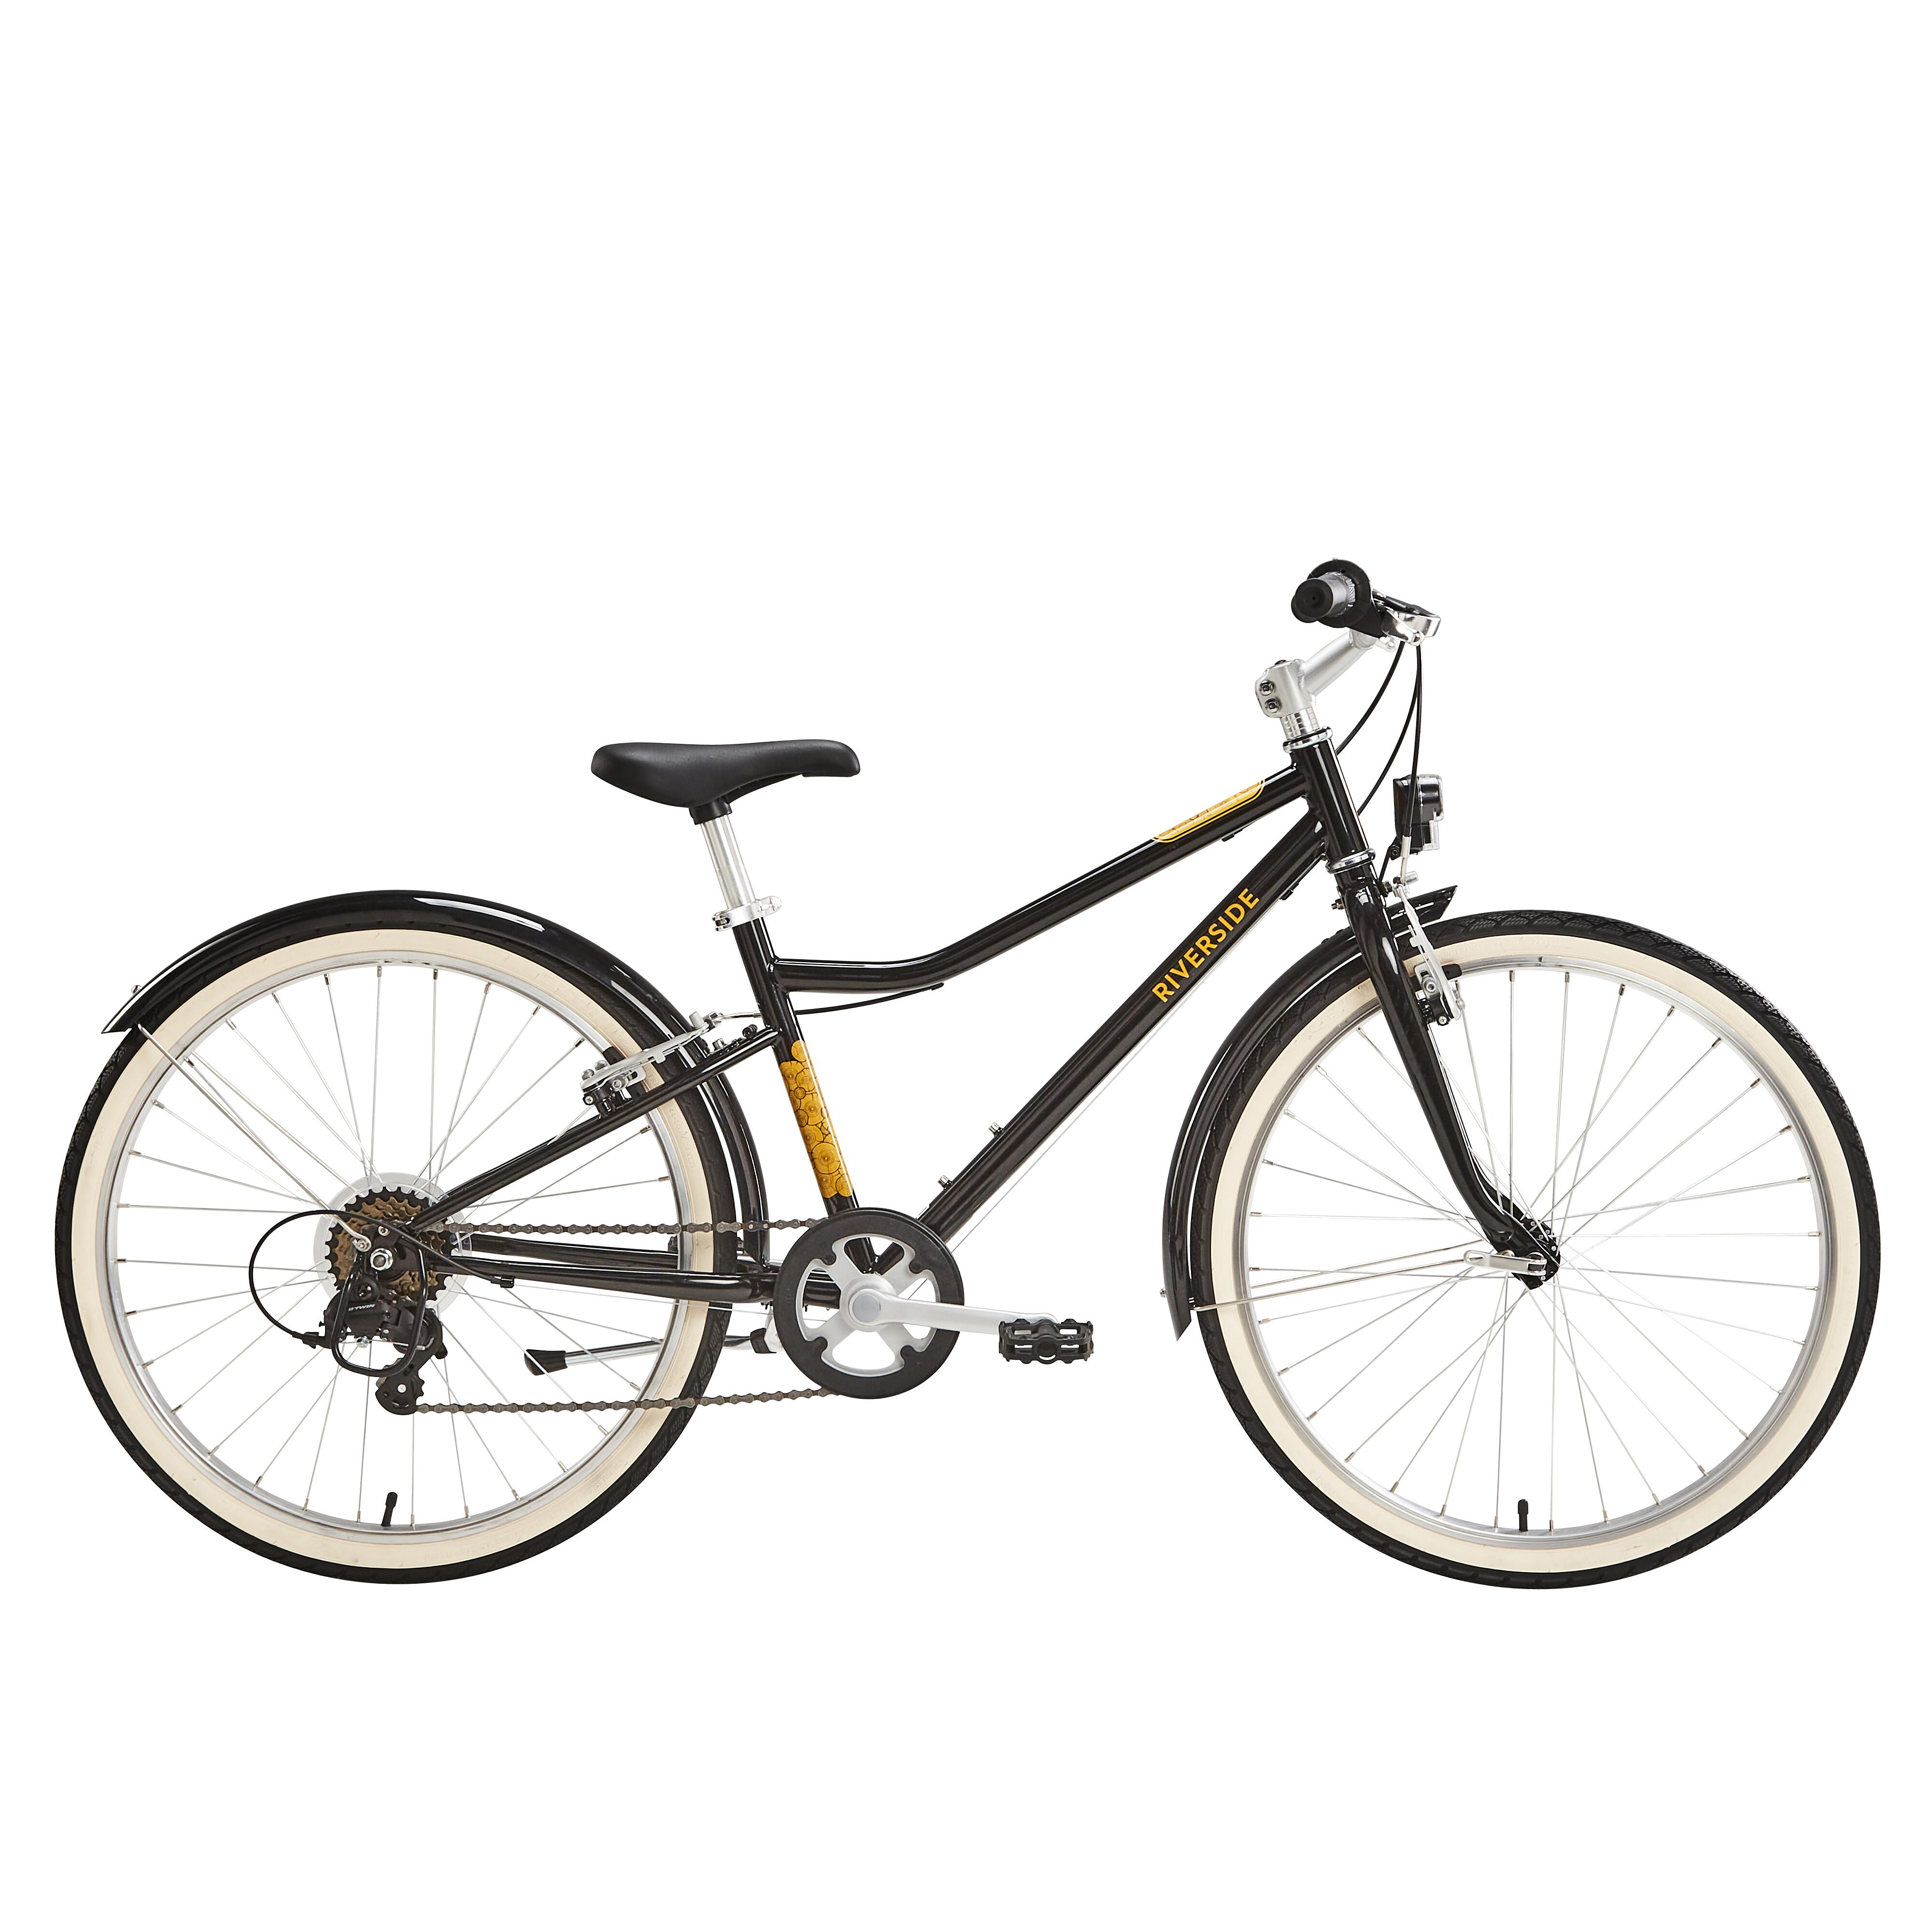 Bicicletă polivalentă Riverside 500 24 inch Negru-Galben Copii 9-12 ani BTWIN BTWIN